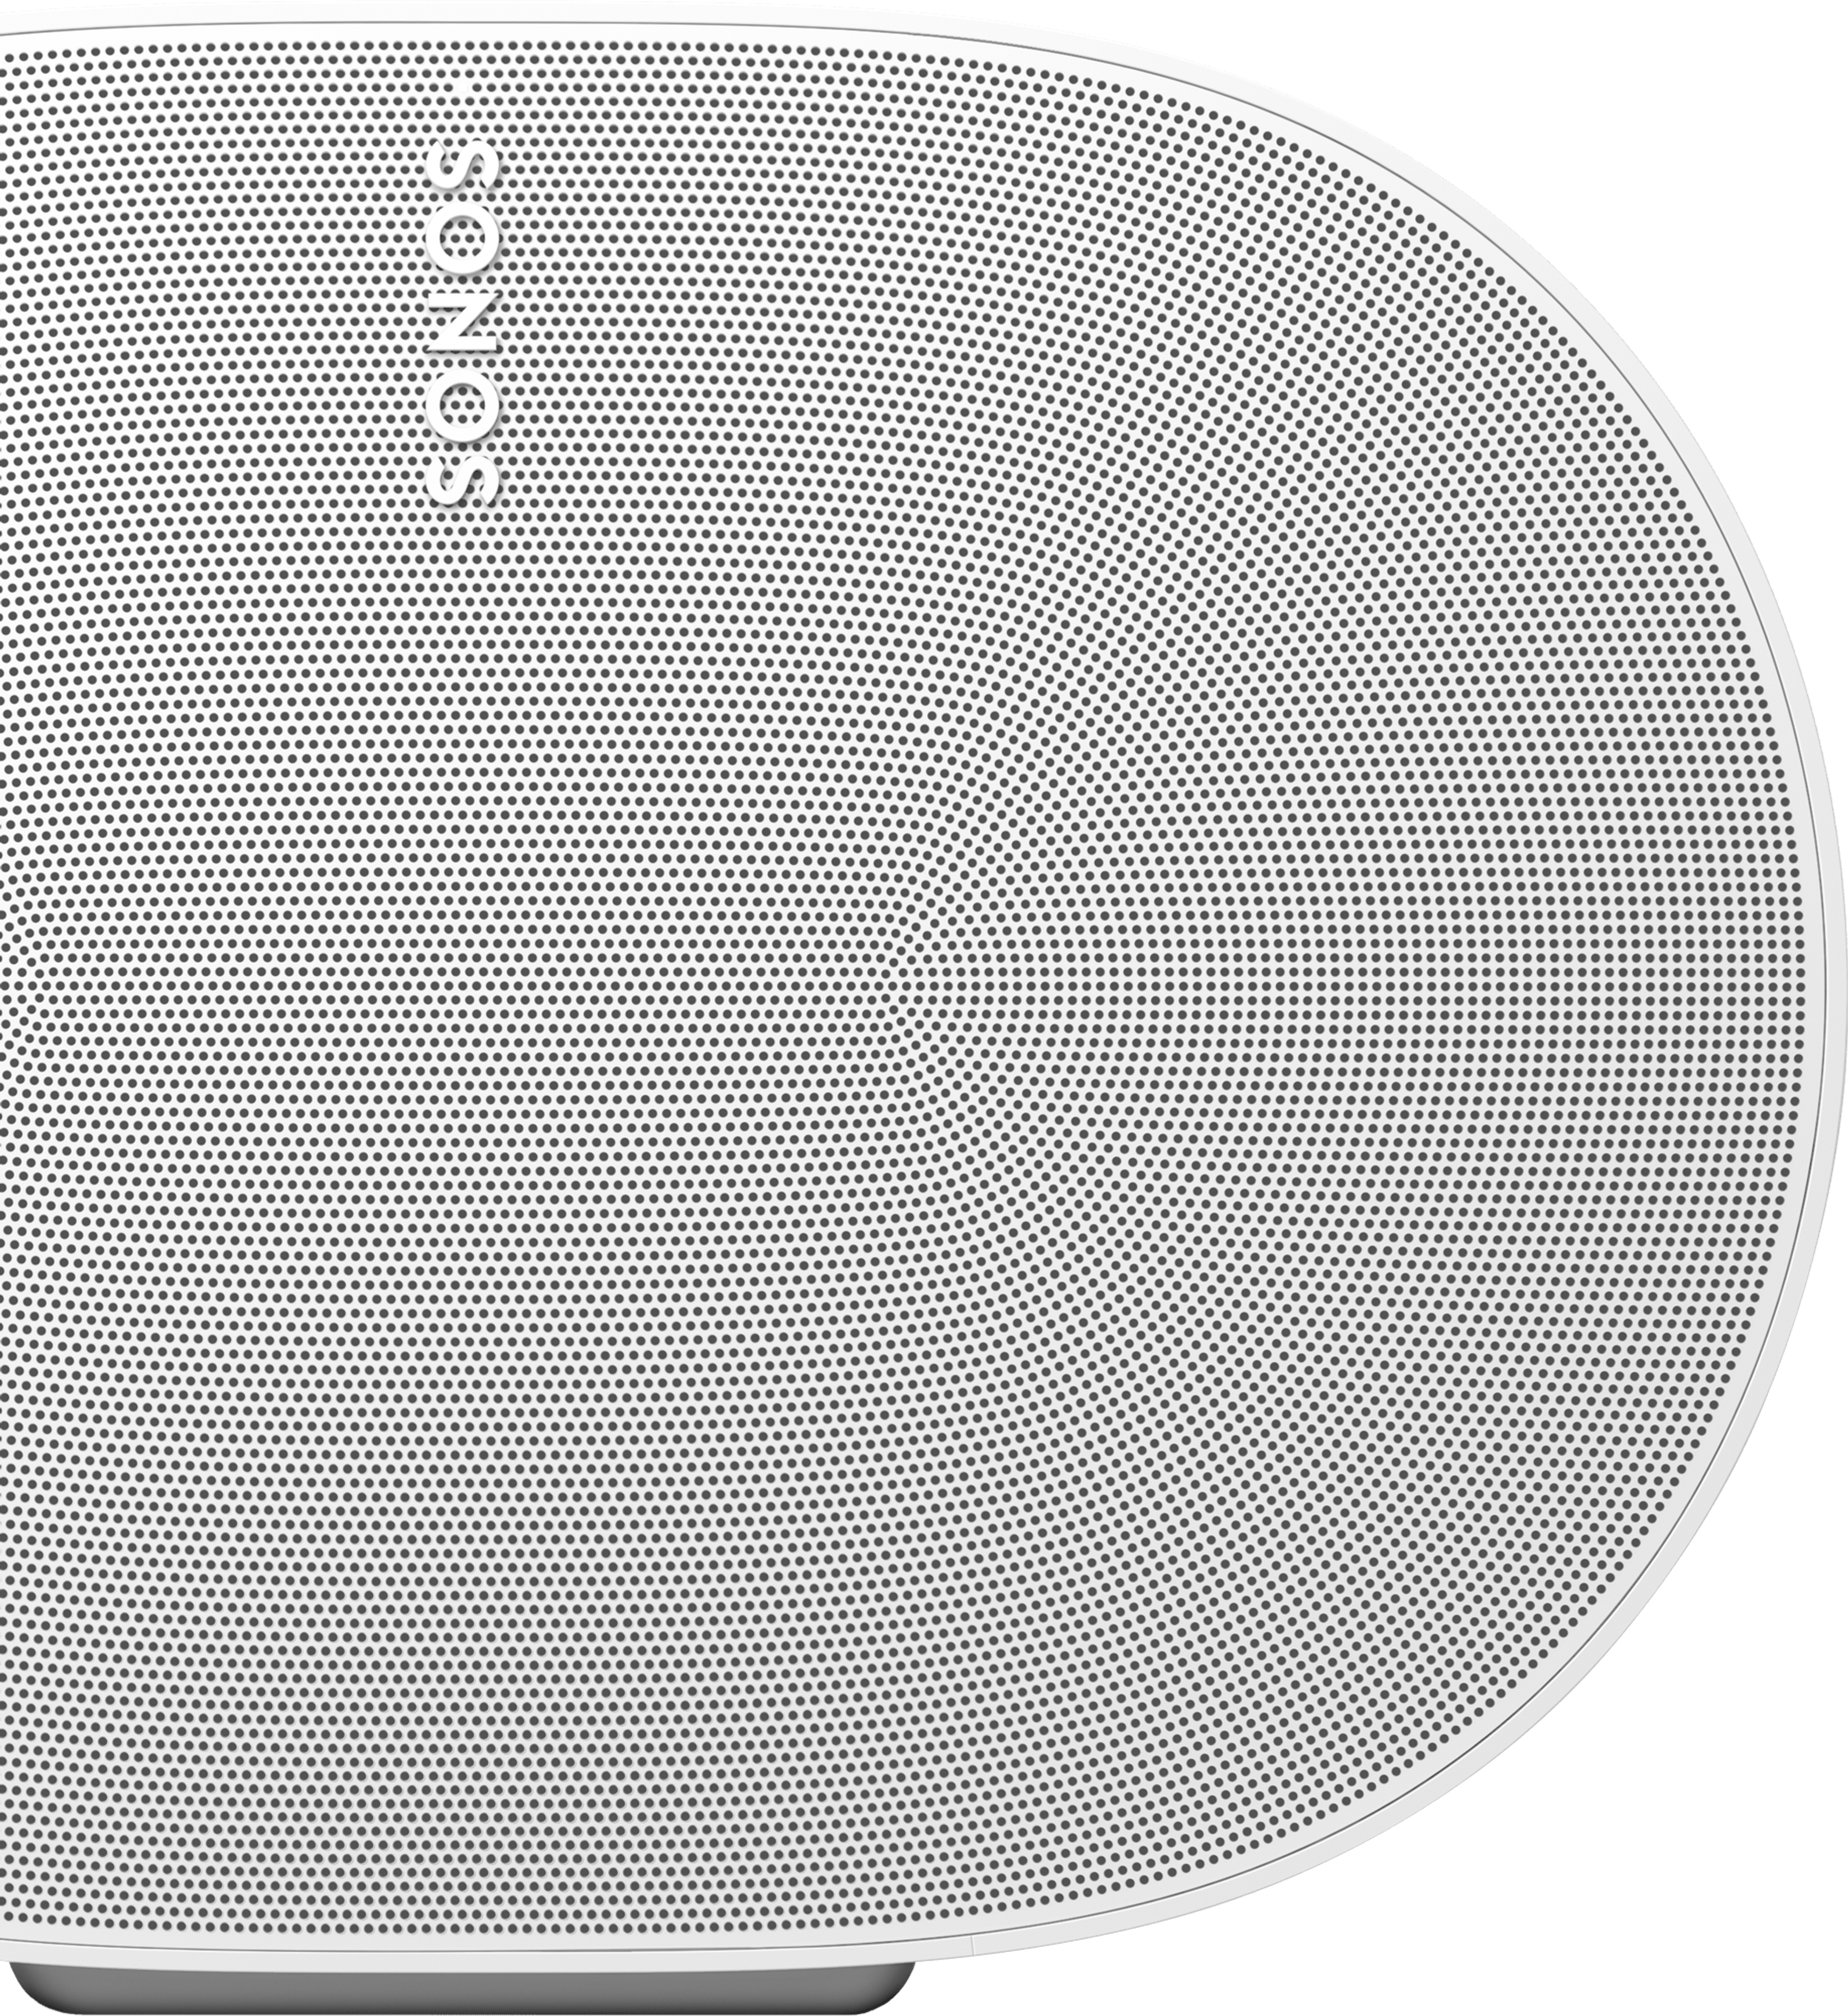 Closeup of the front of white Sonos Era 300 speaker